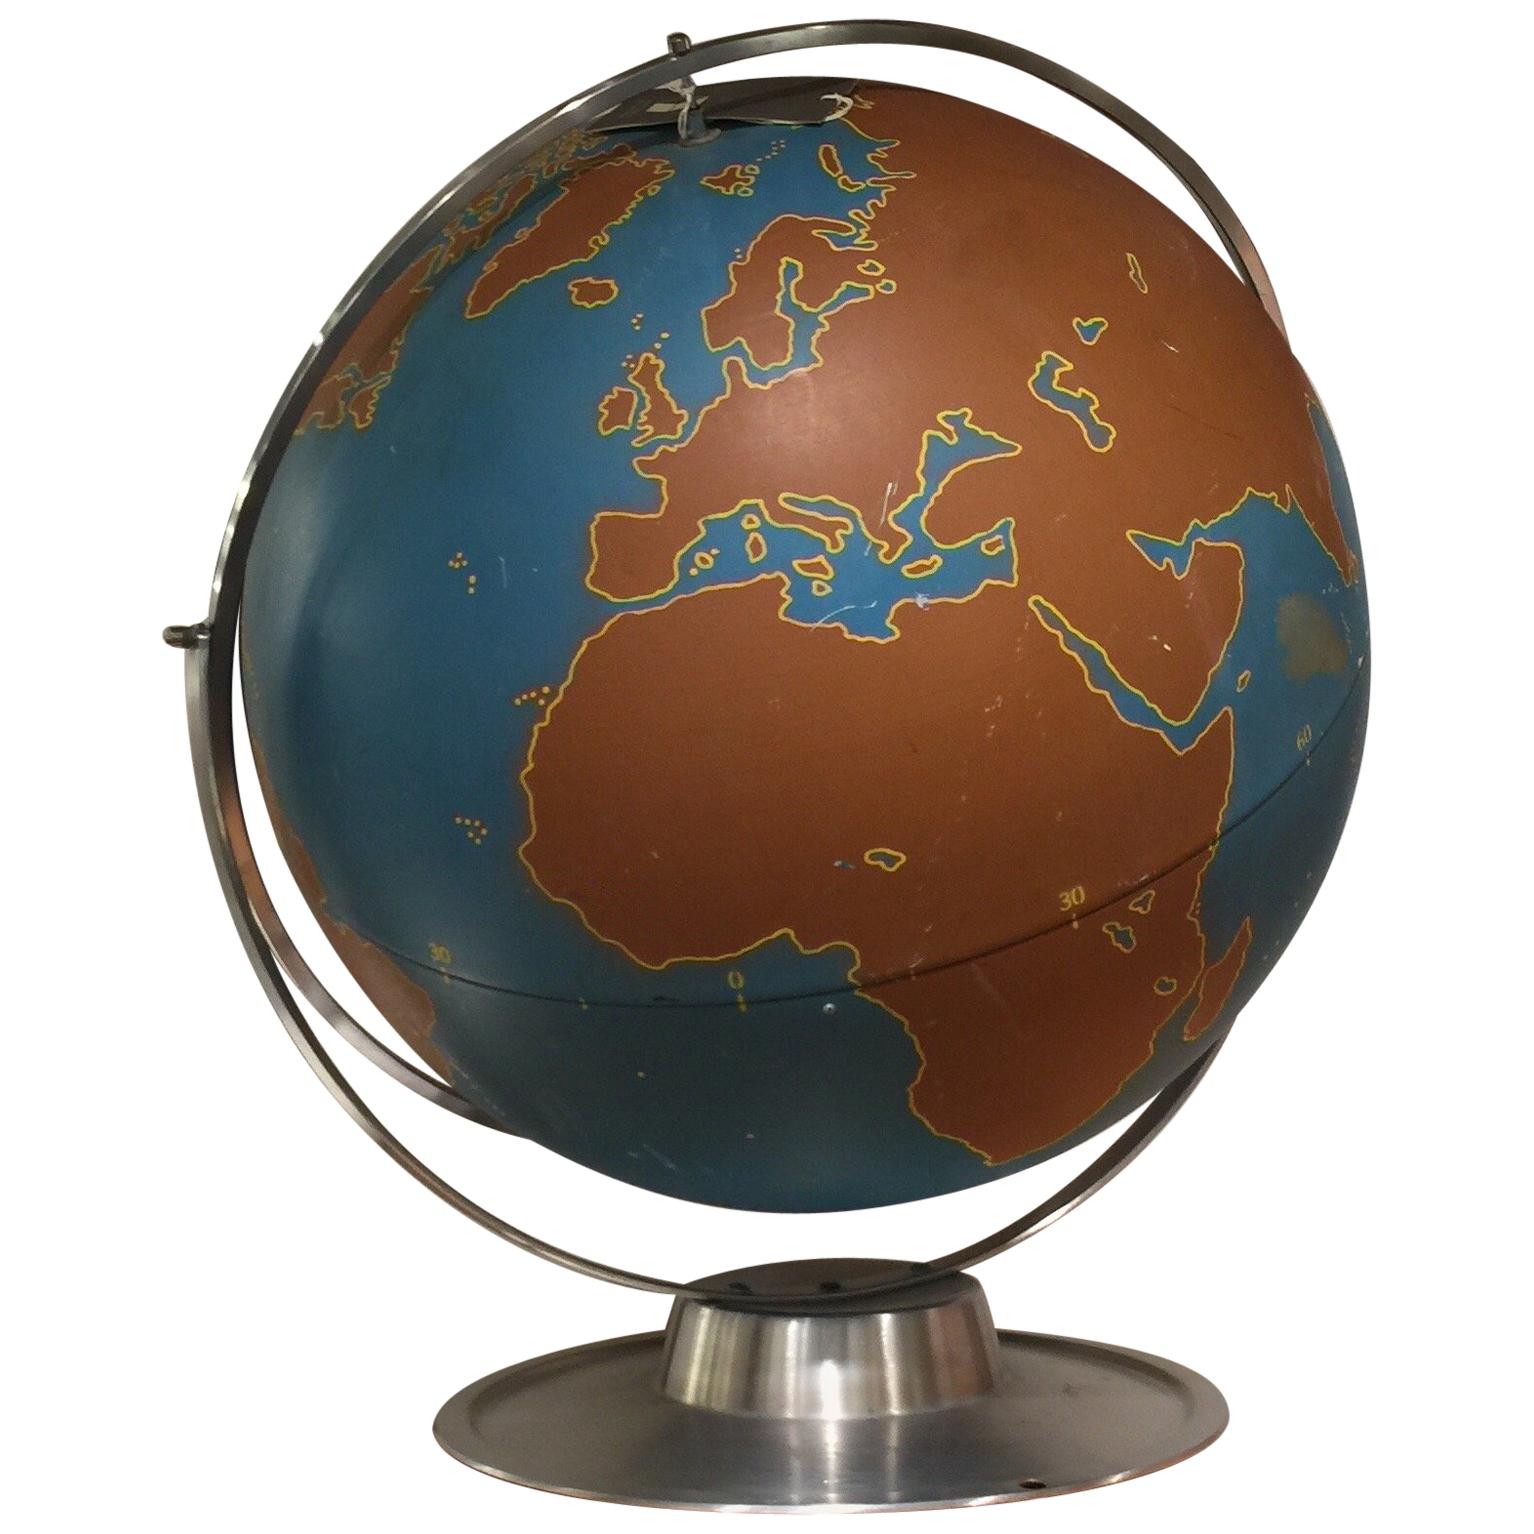 Vintage World Globe by AJ Nystrom